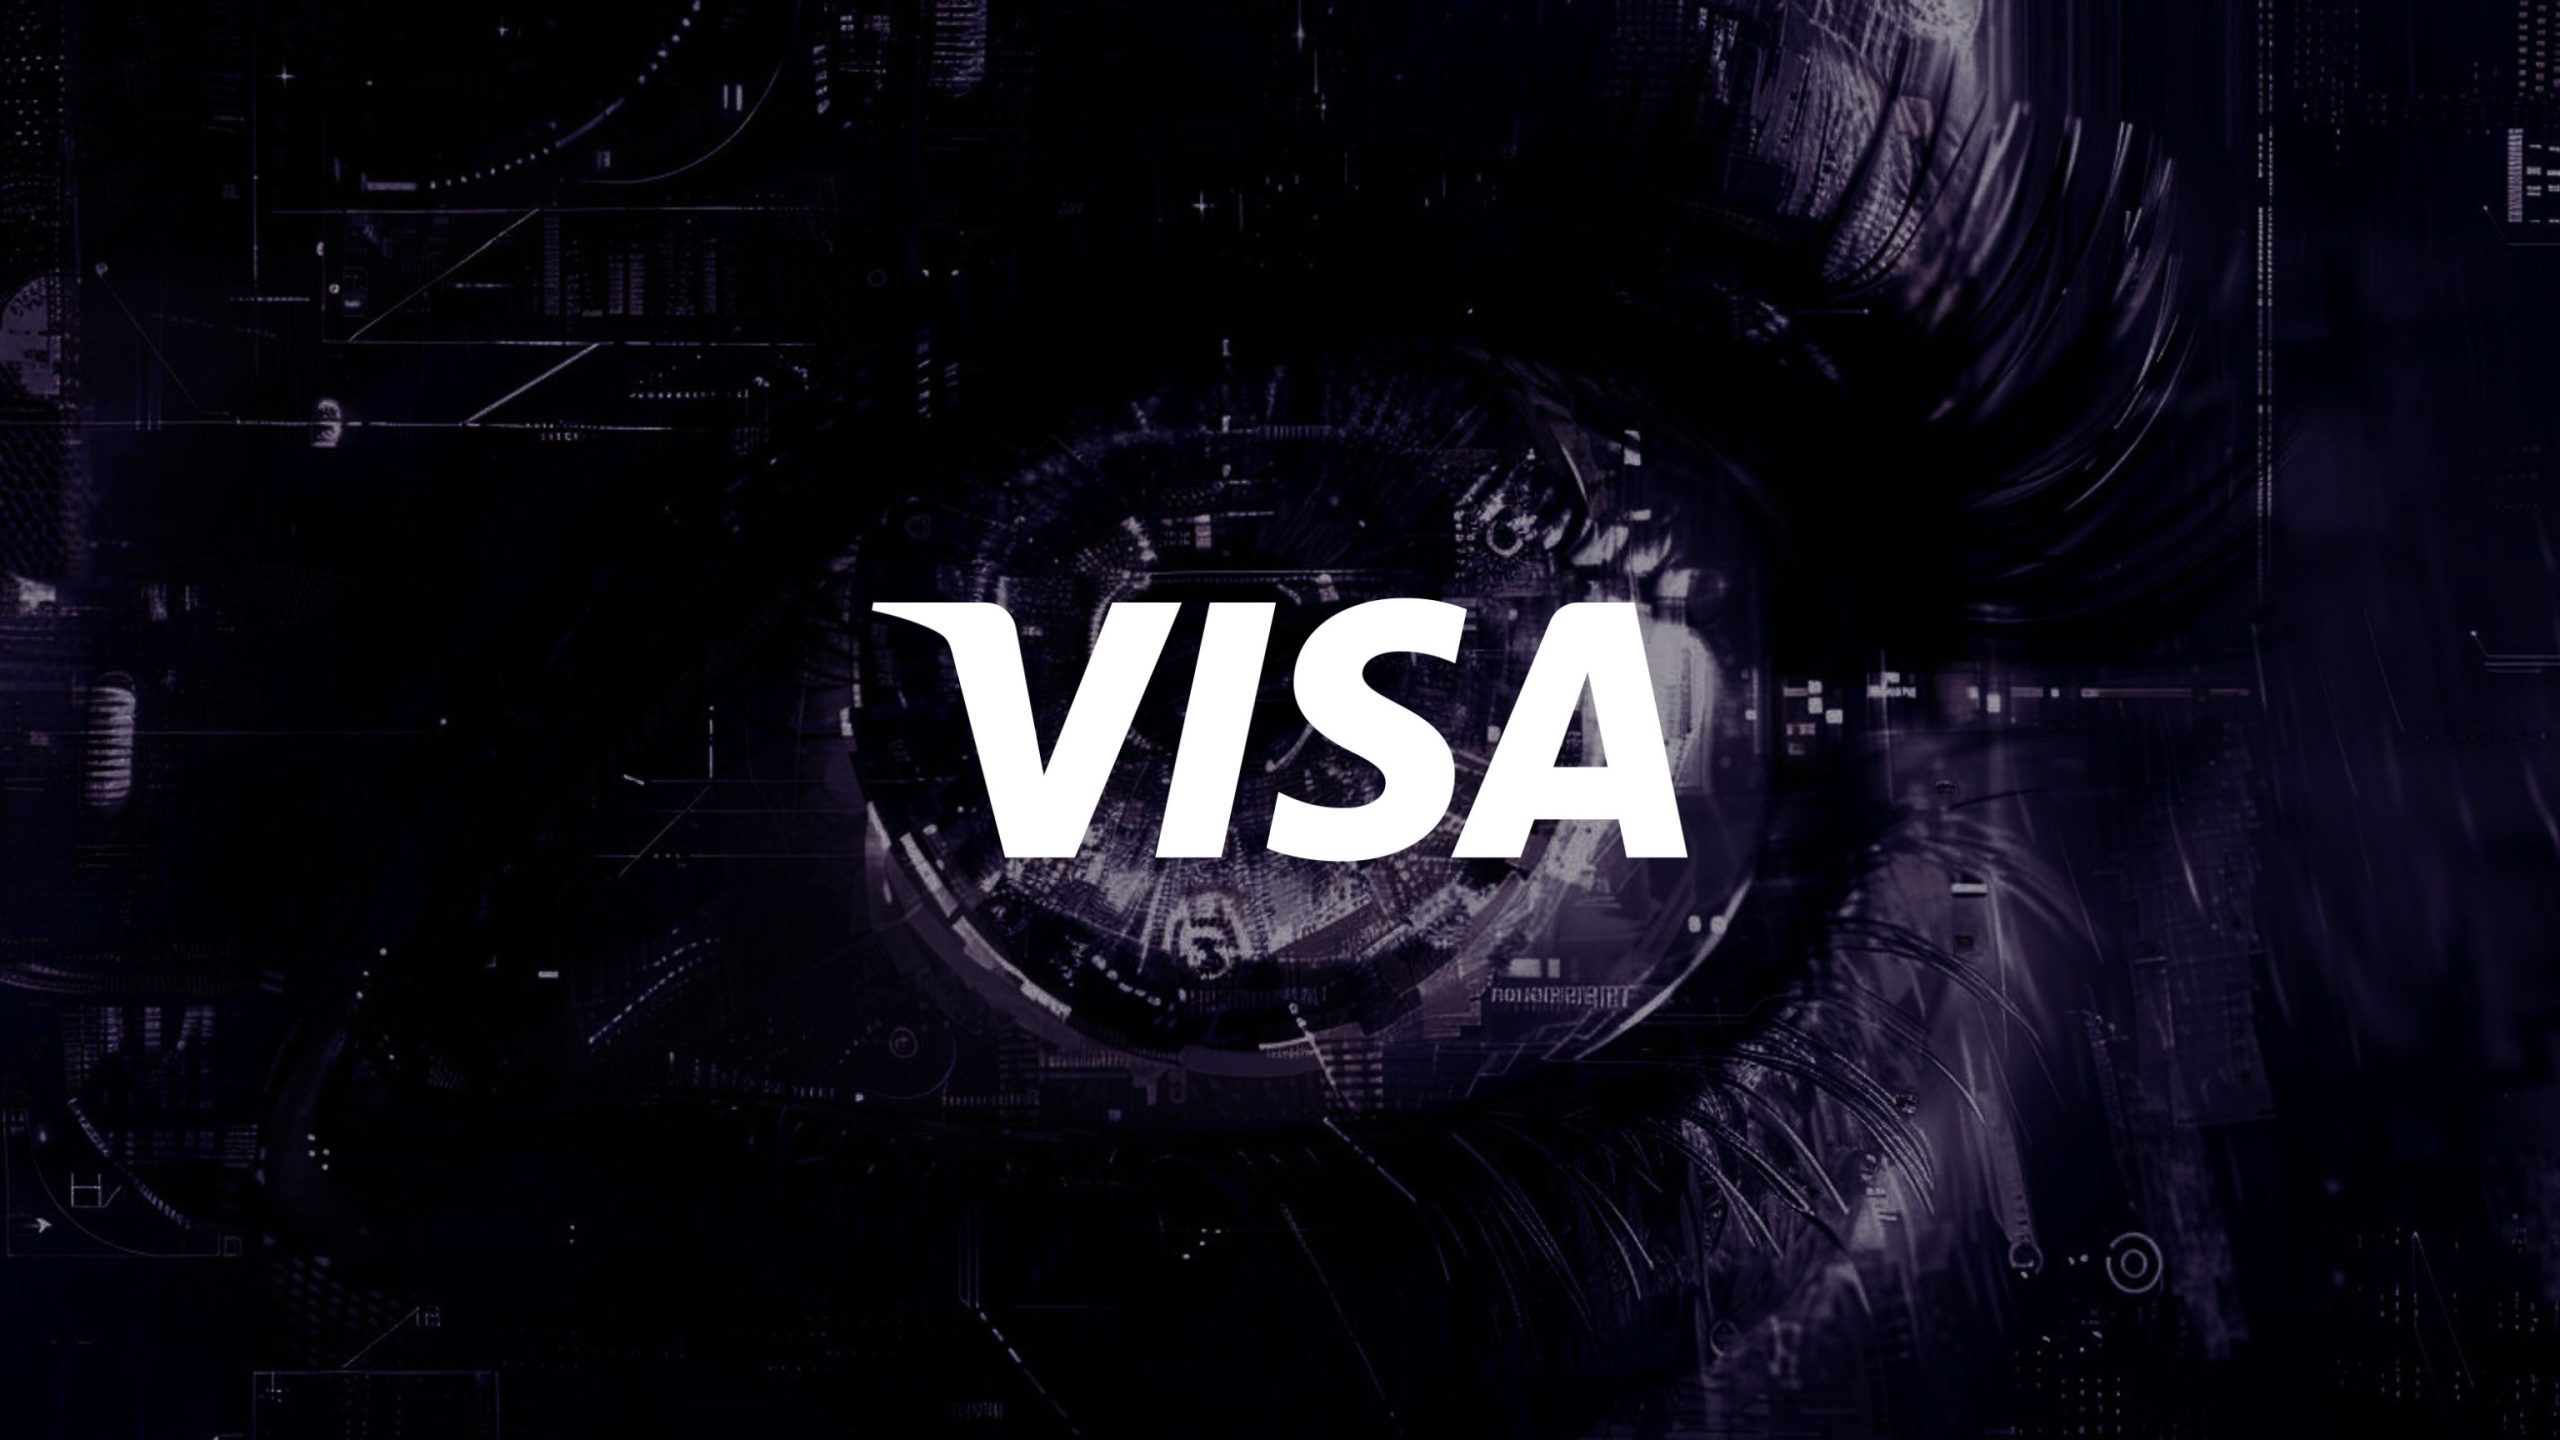 Visa Applies for Biometric Authentication Patent